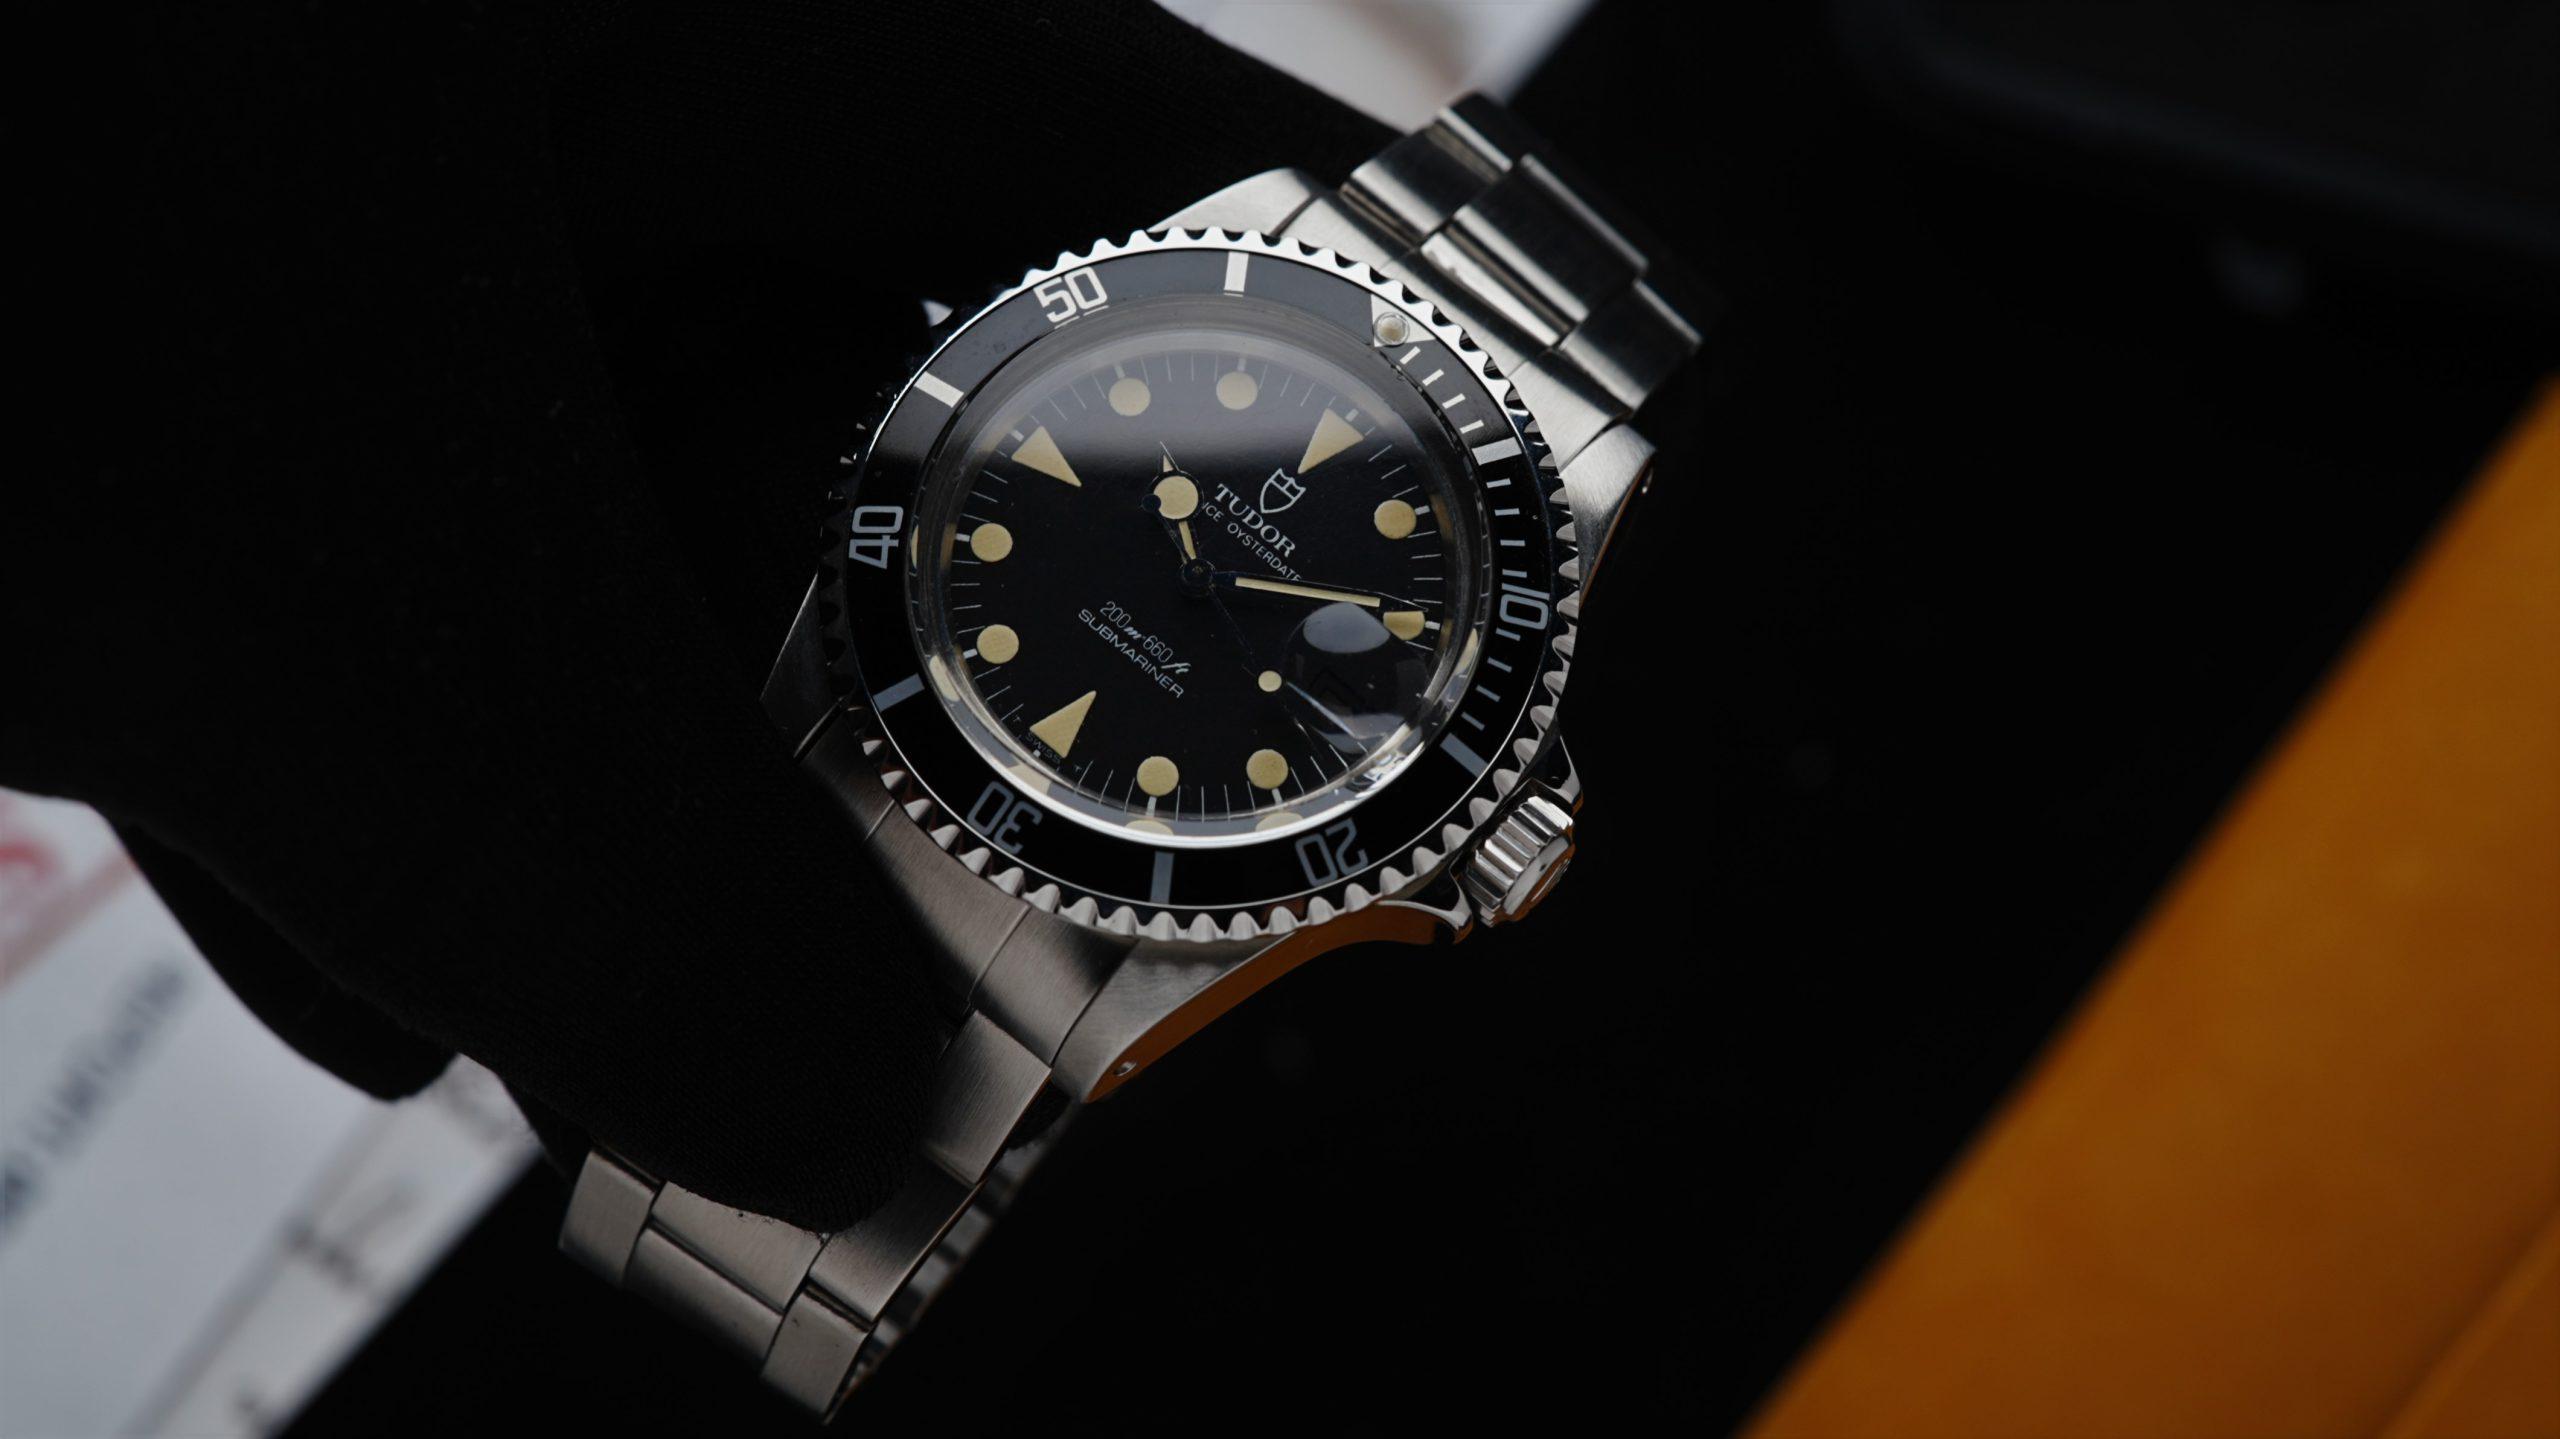 Tudor Submariner Lollipop Hands Perfect Patina 76100 watch being held in hand.